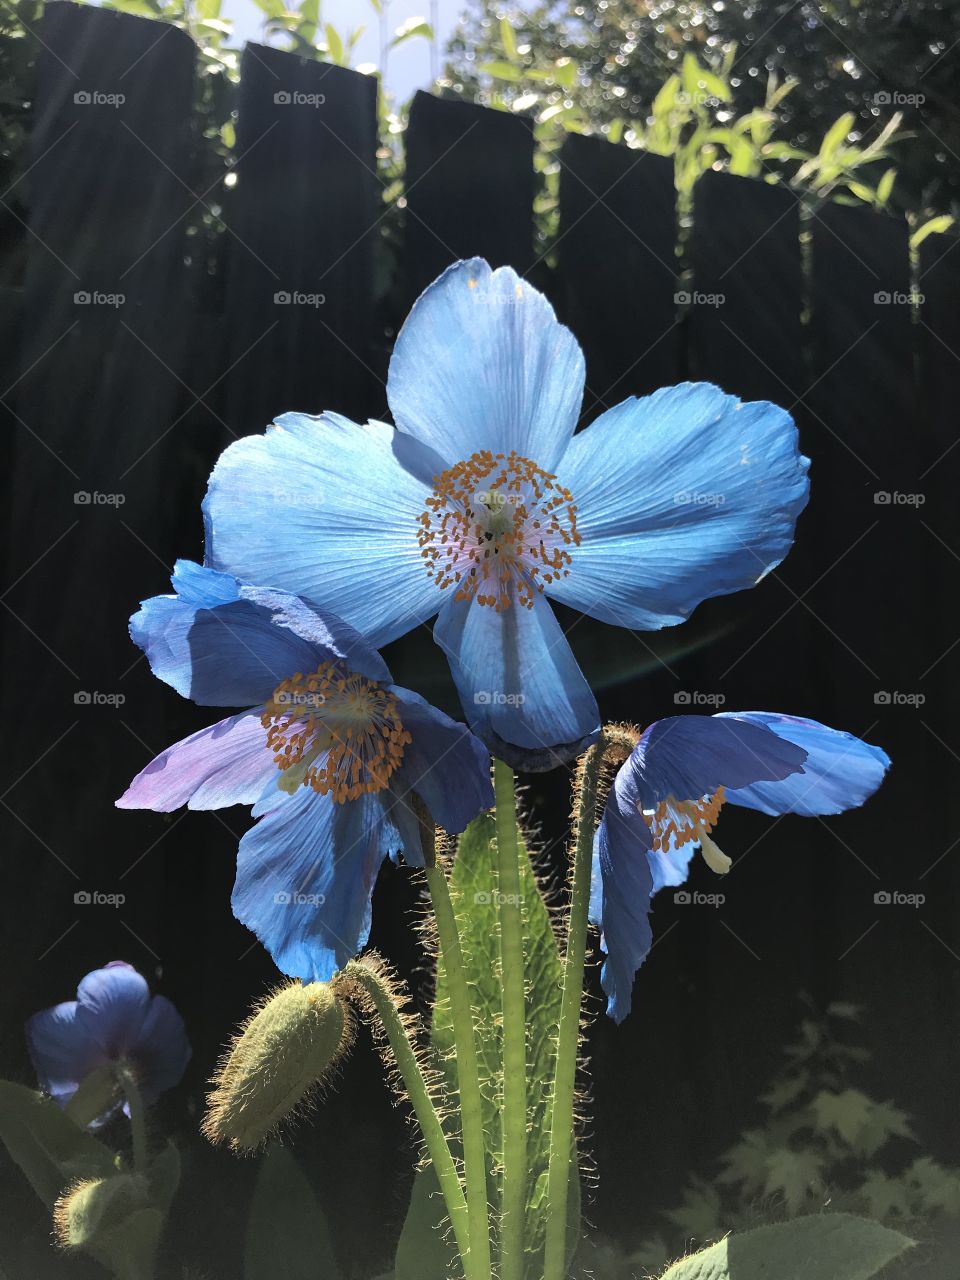 Blue blooms